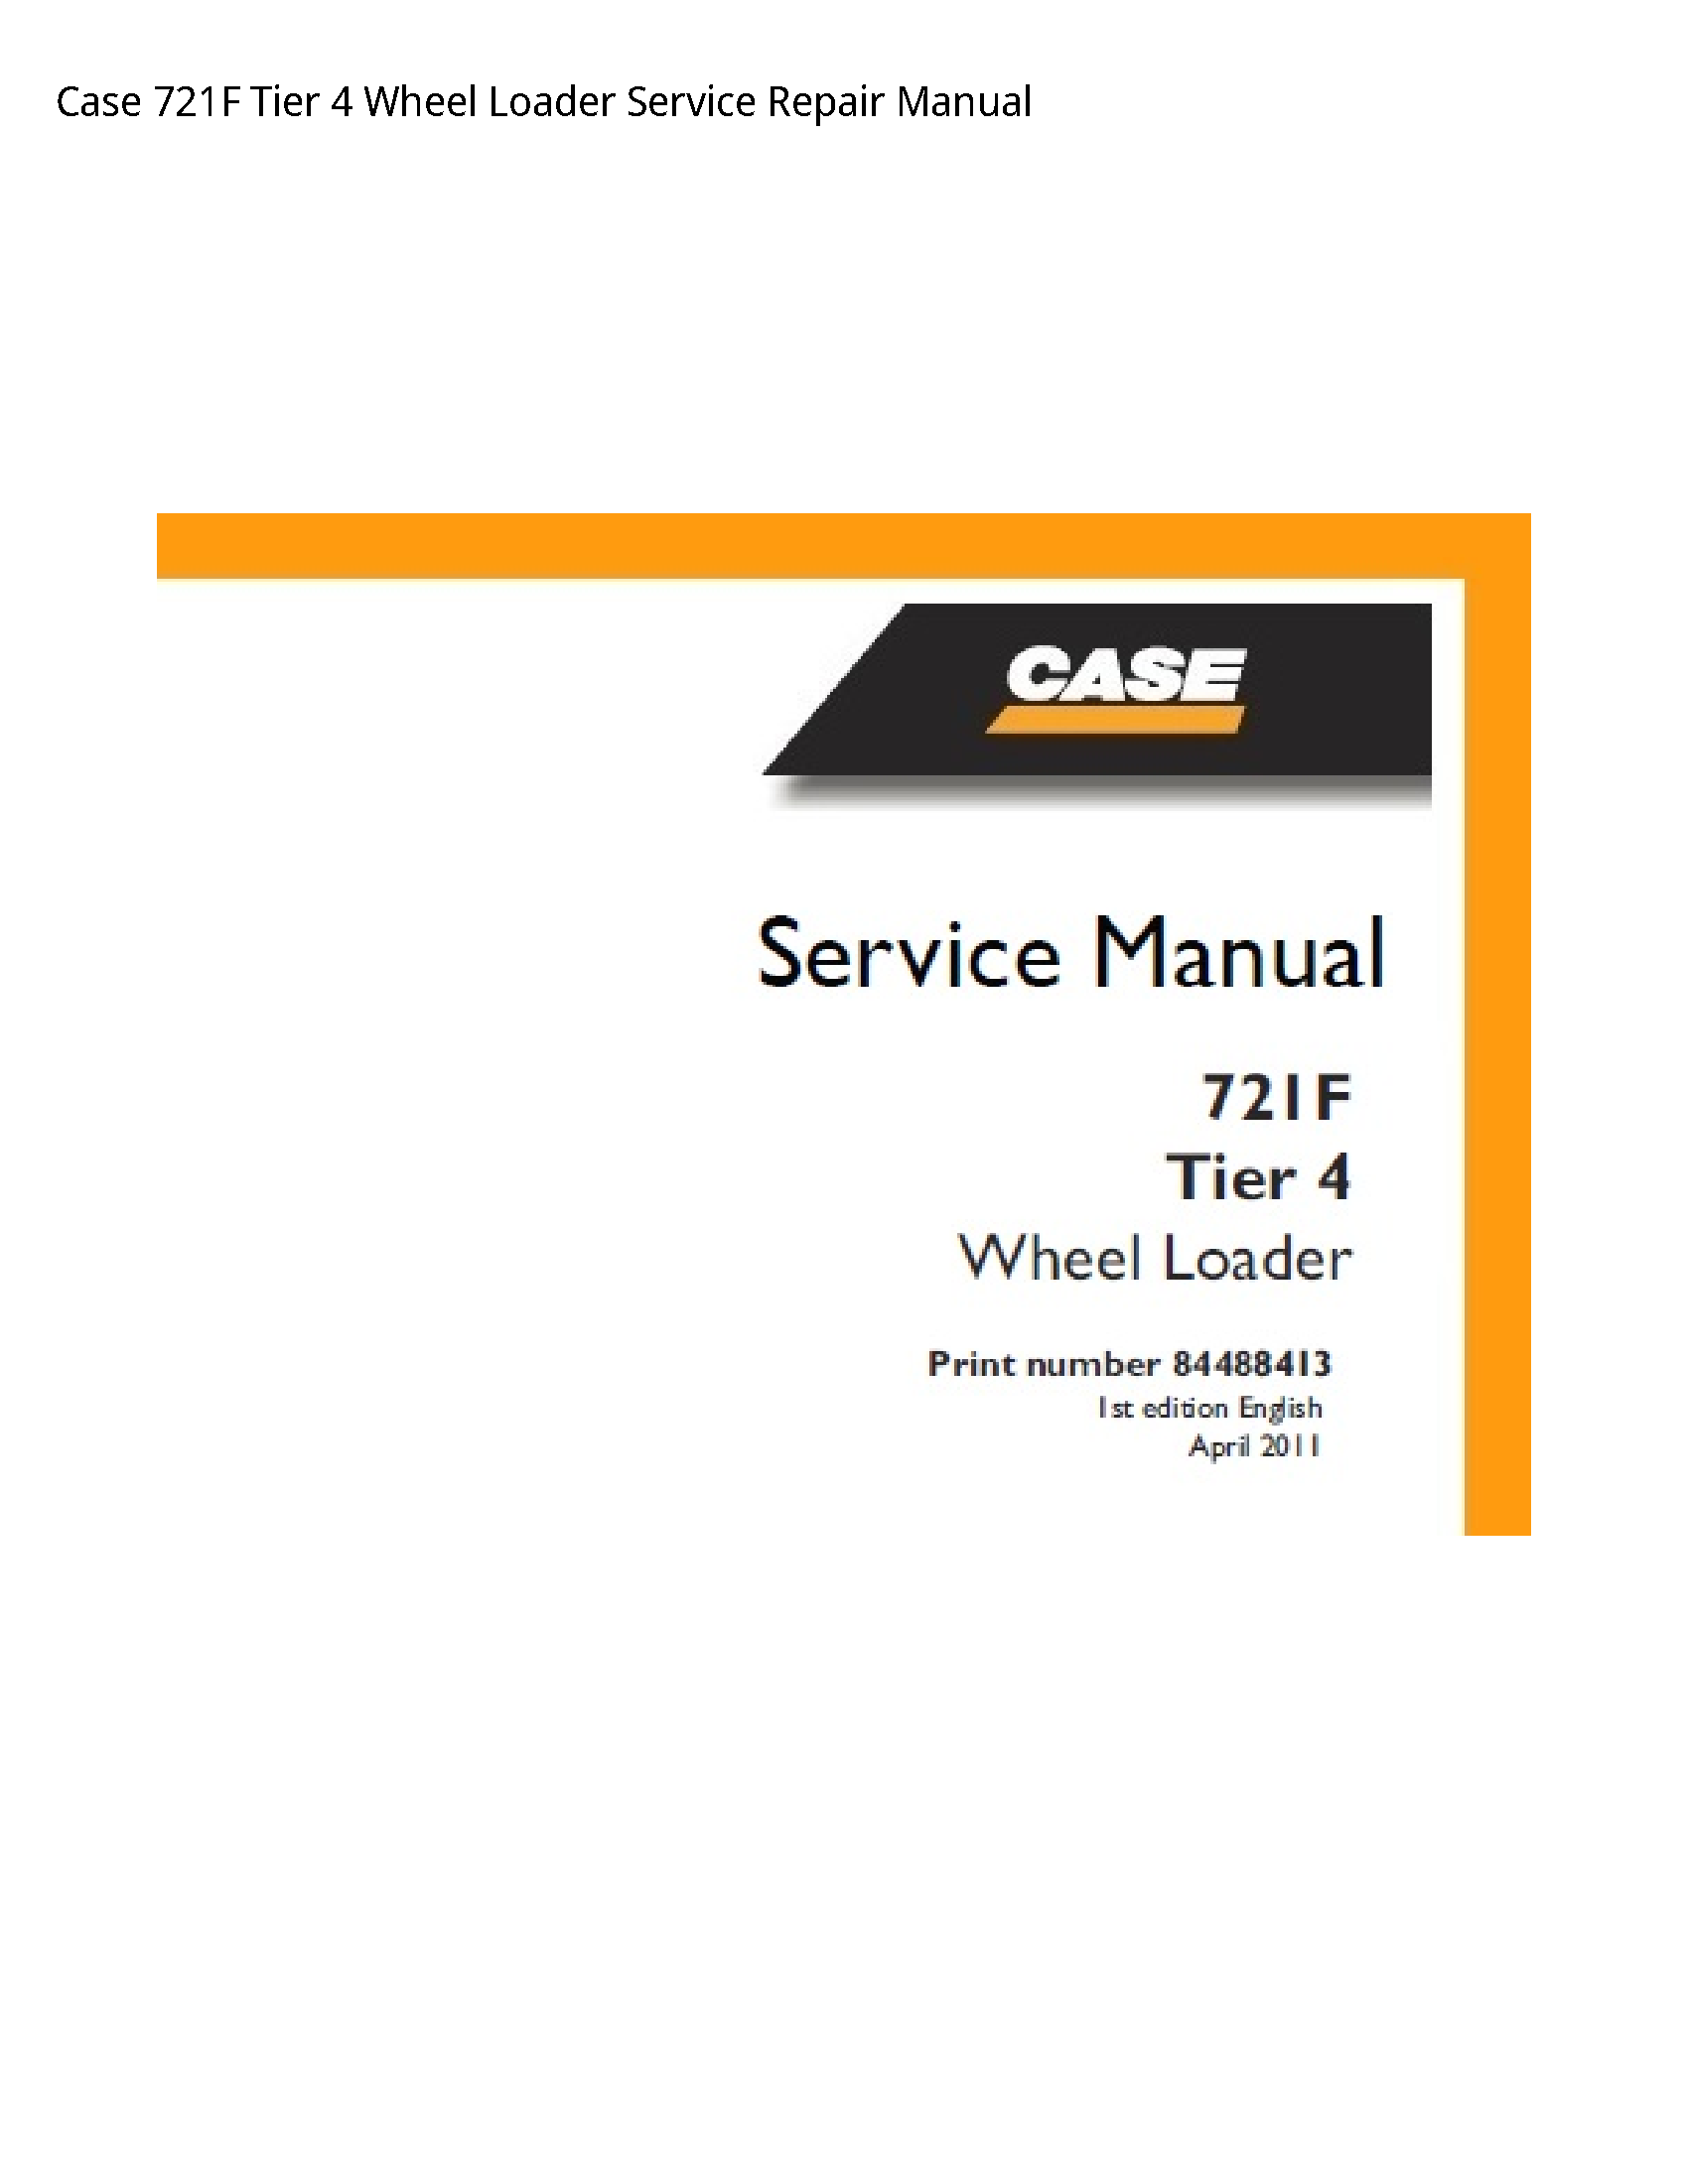 Case/Case IH 721F Tier Wheel Loader manual